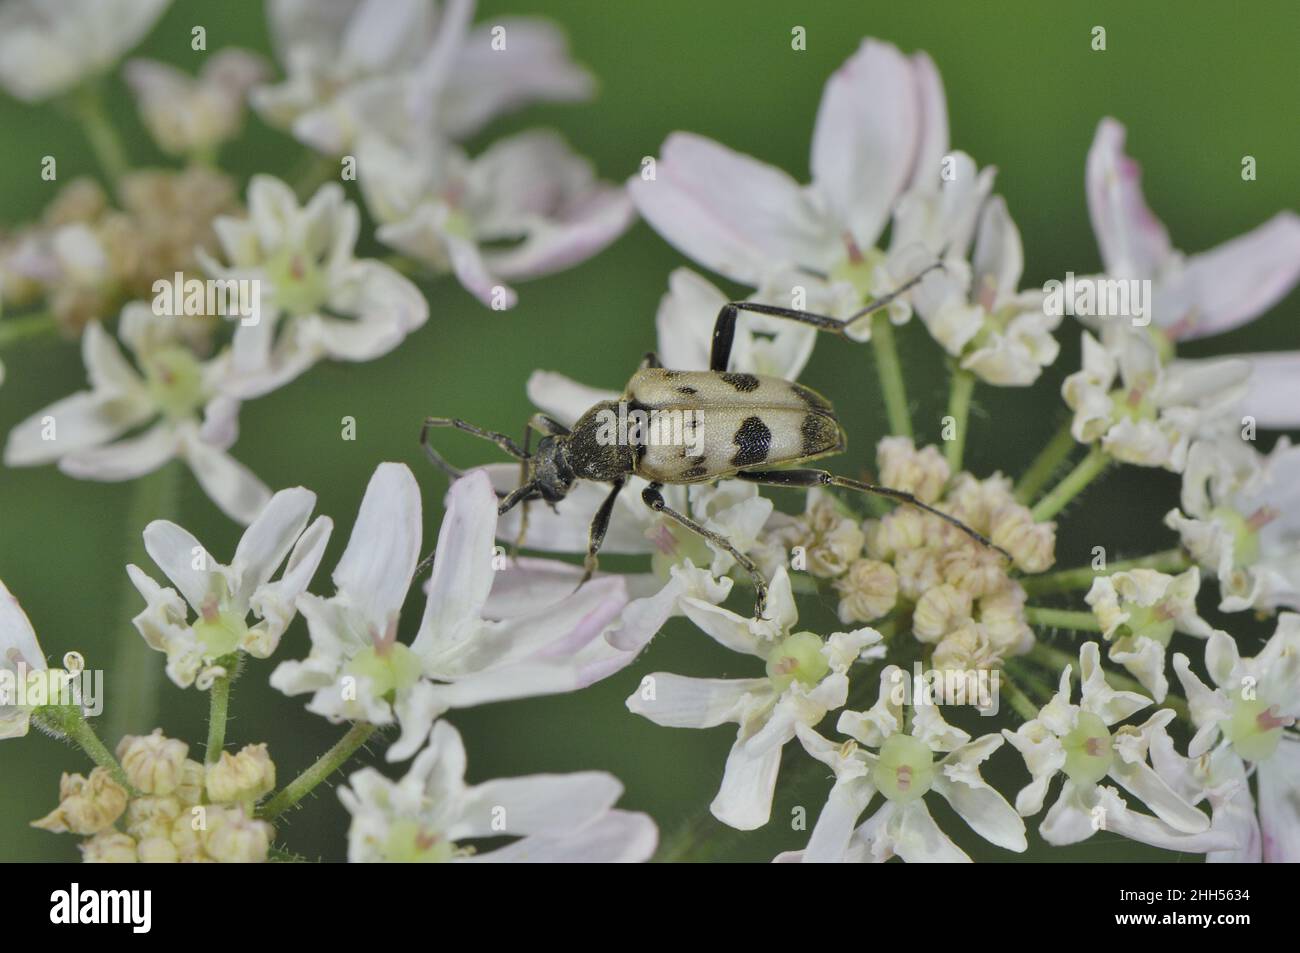 Speckled longhorn beetle (Pachytodes cerambyciformis - Judolia cerambyciformis) on flower Ardenne - Belgium Stock Photo